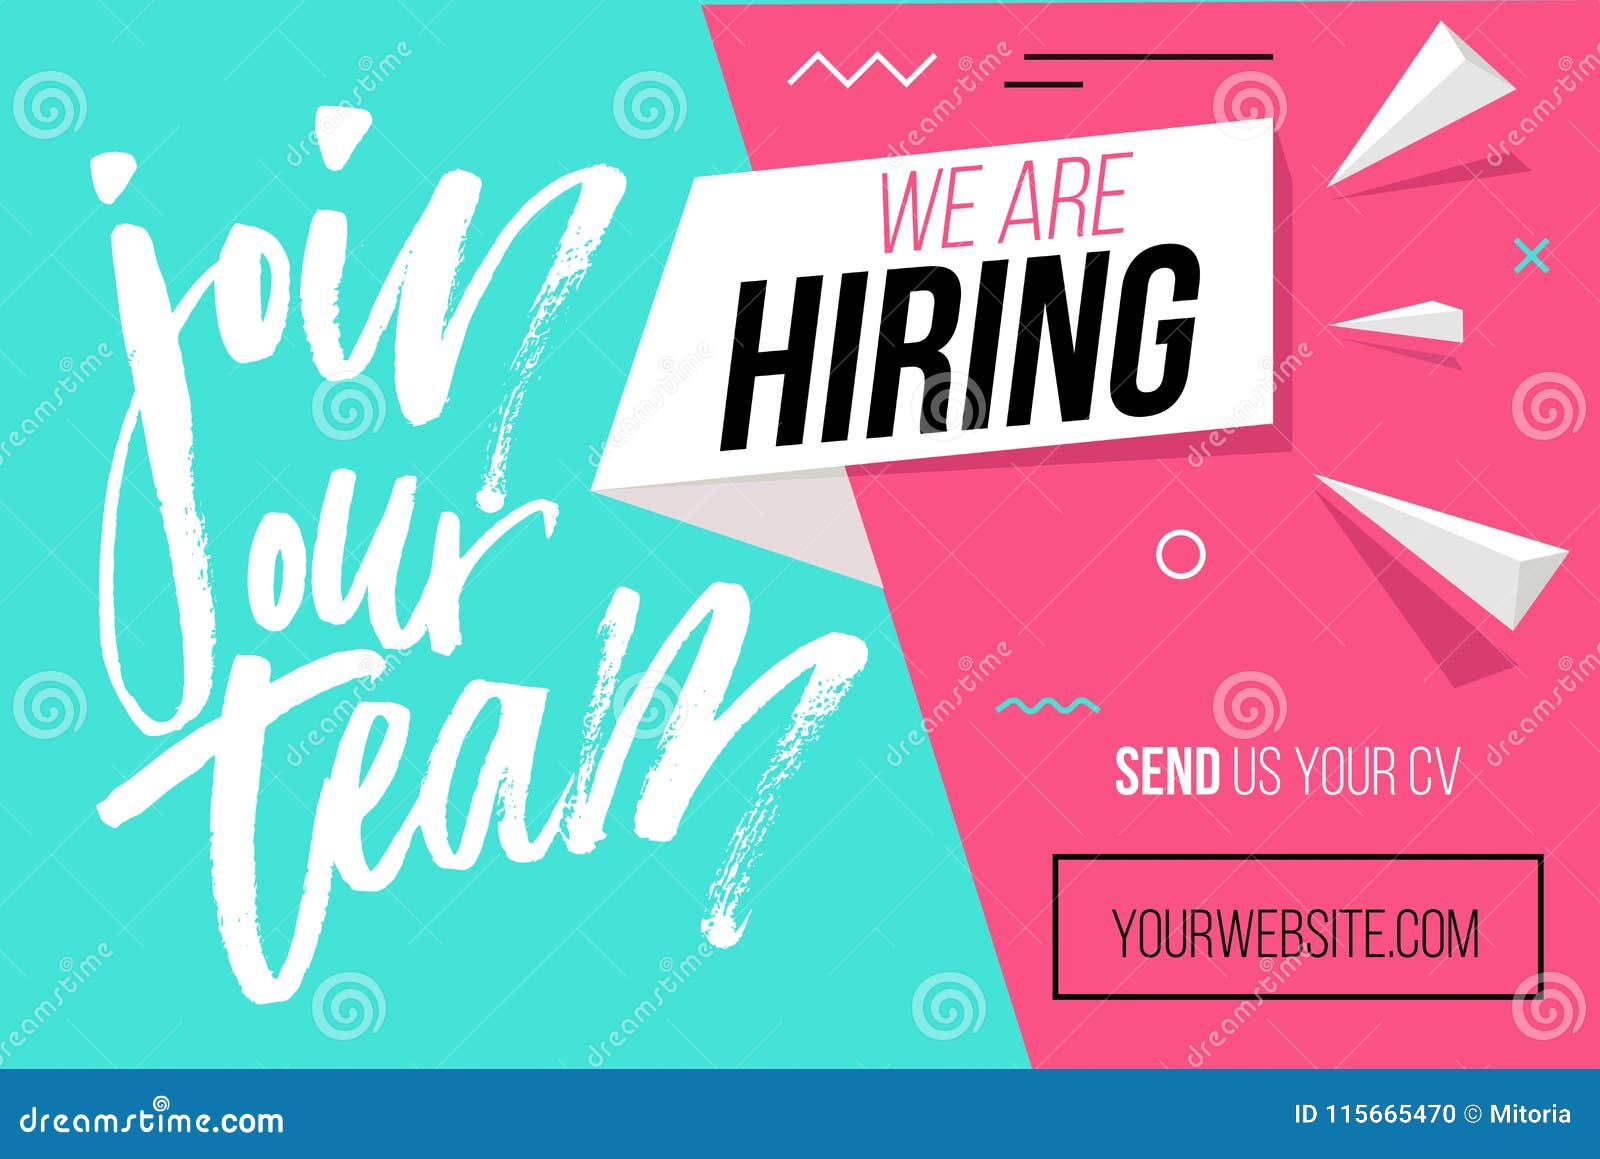 hiring recruitment  poster. we are hiring brush lettering